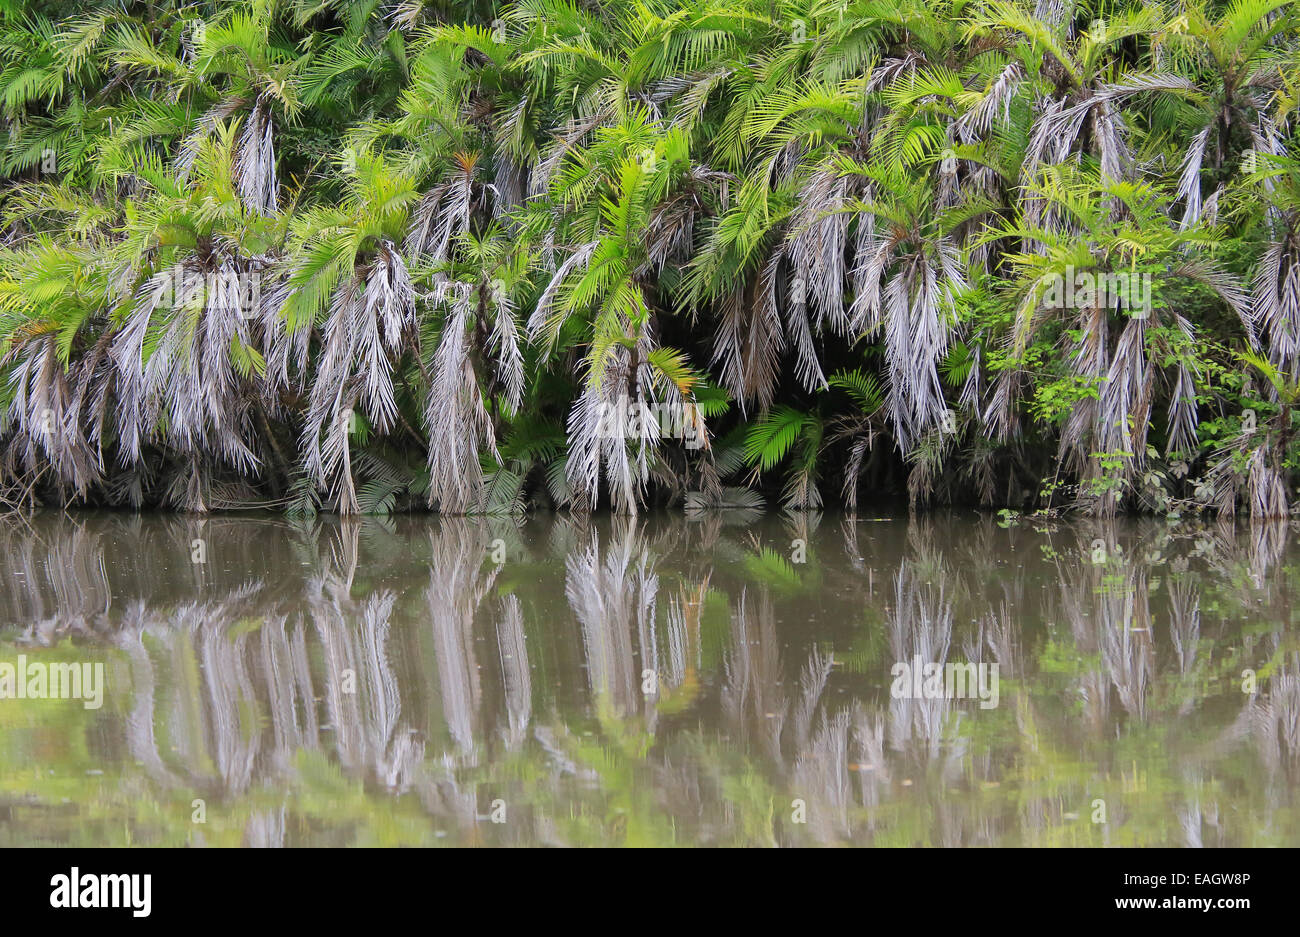 Palmen am Ufer des Flusses Tempisque, Guanacaste, Costa Rica. Oktober 2013. Stockfoto